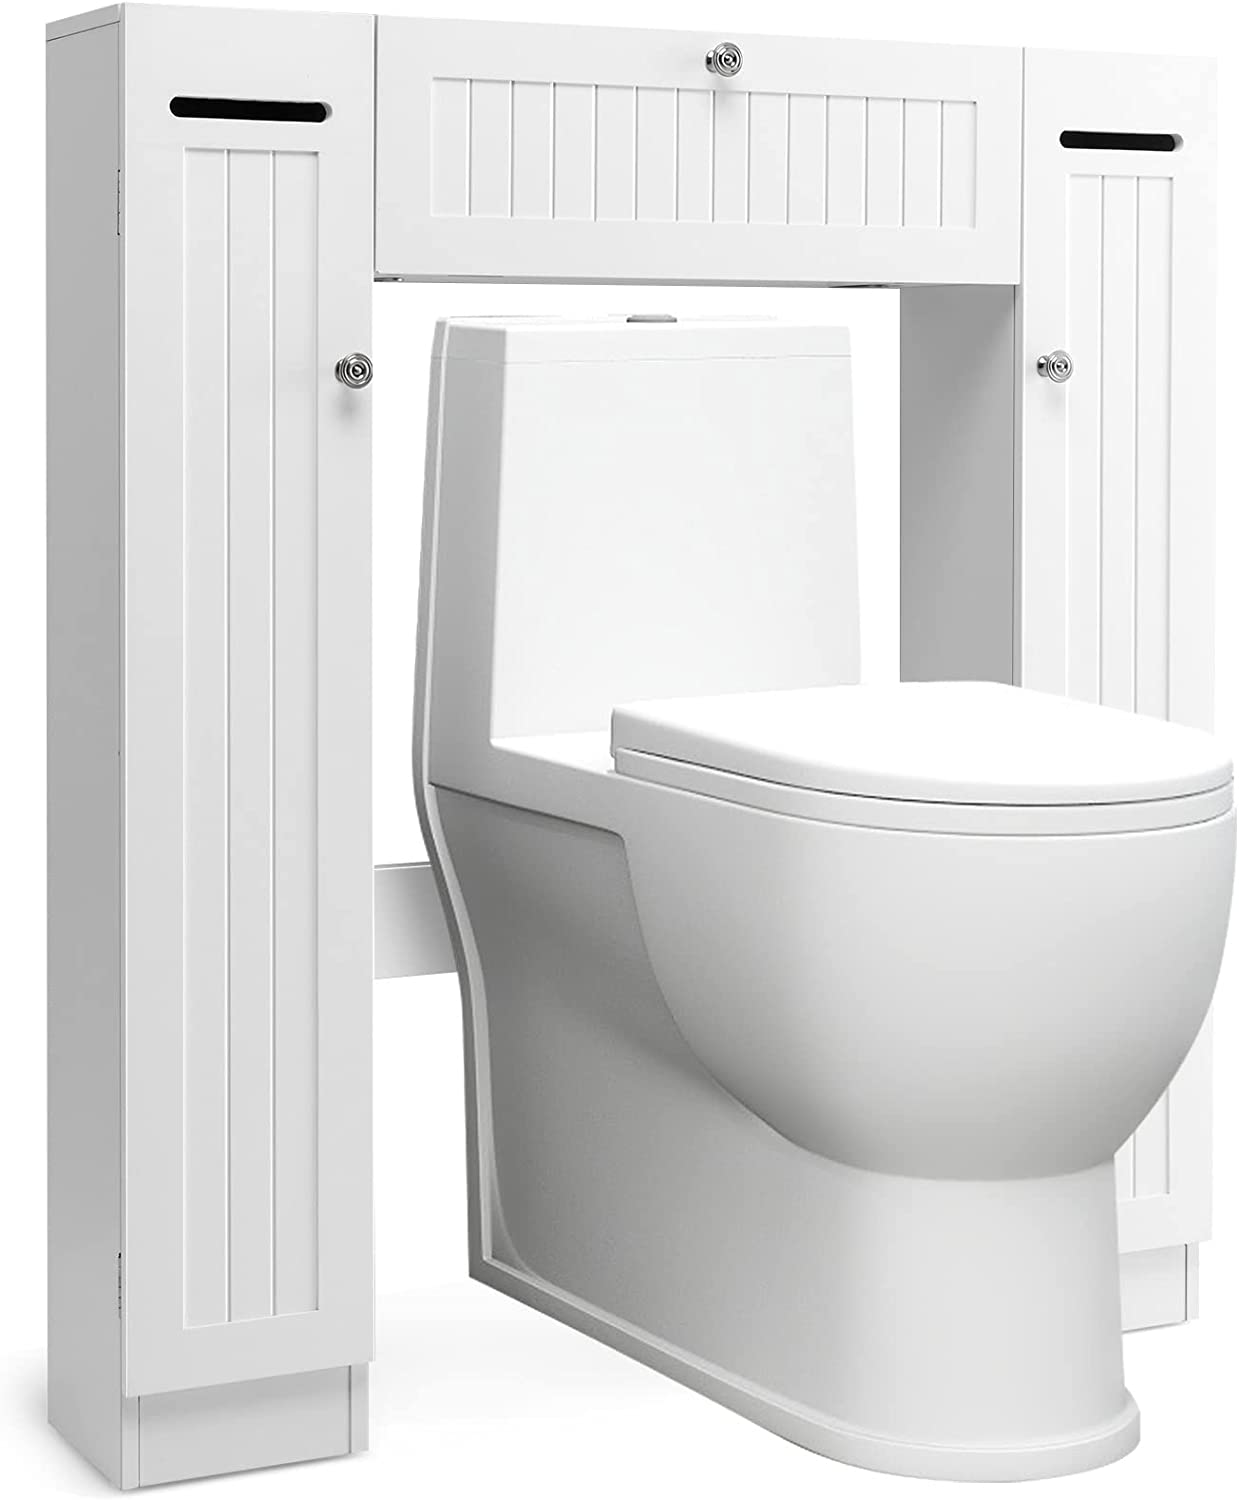 Over-The-Toilet Rack Bathroom Shelf - Giantex